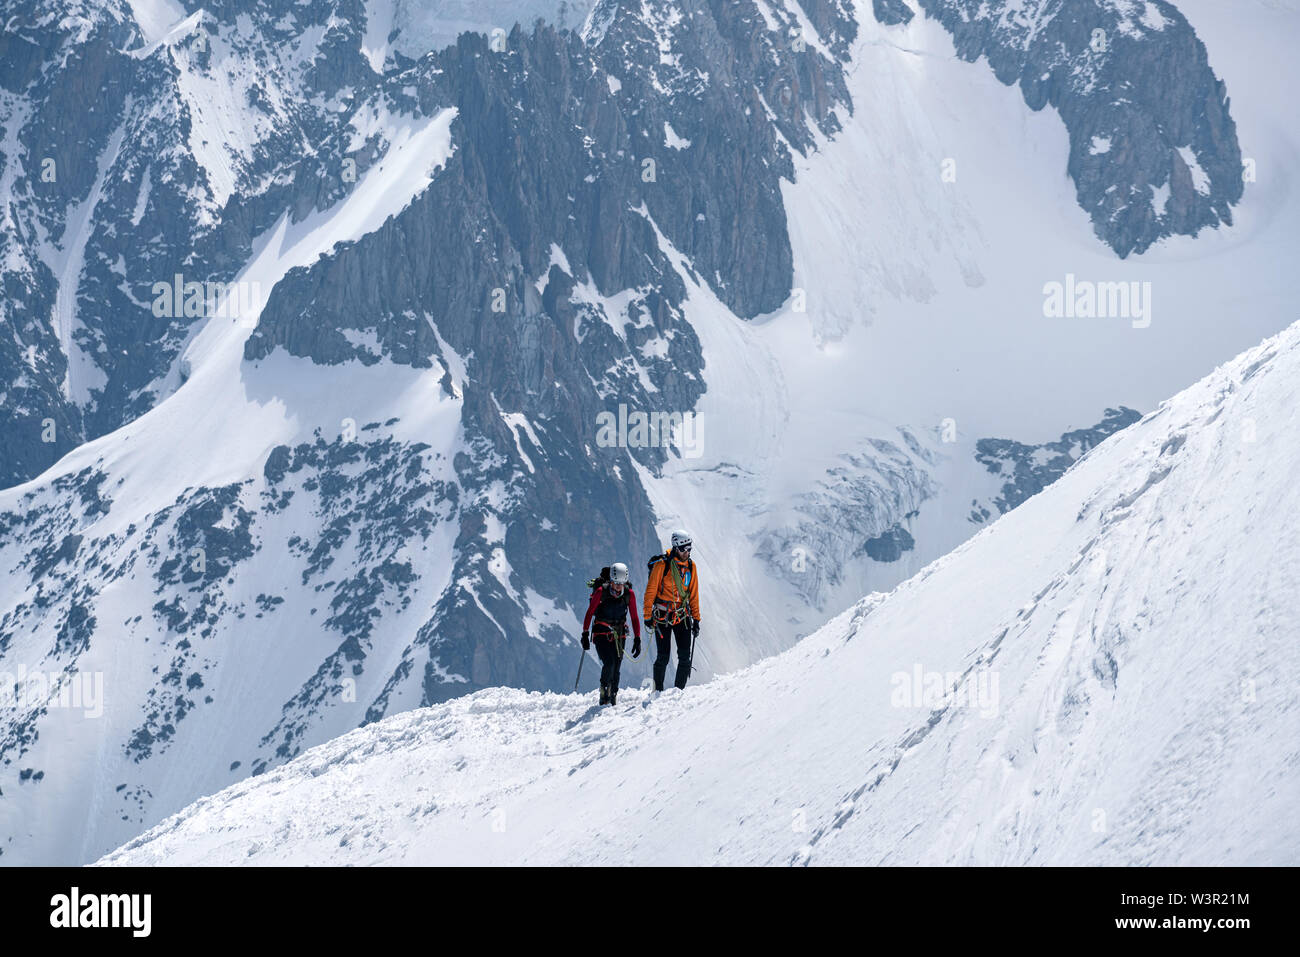 Chamonix, France - 18/06/2019: Alpinist on snowy ridge against huge mountain background. Stock Photo